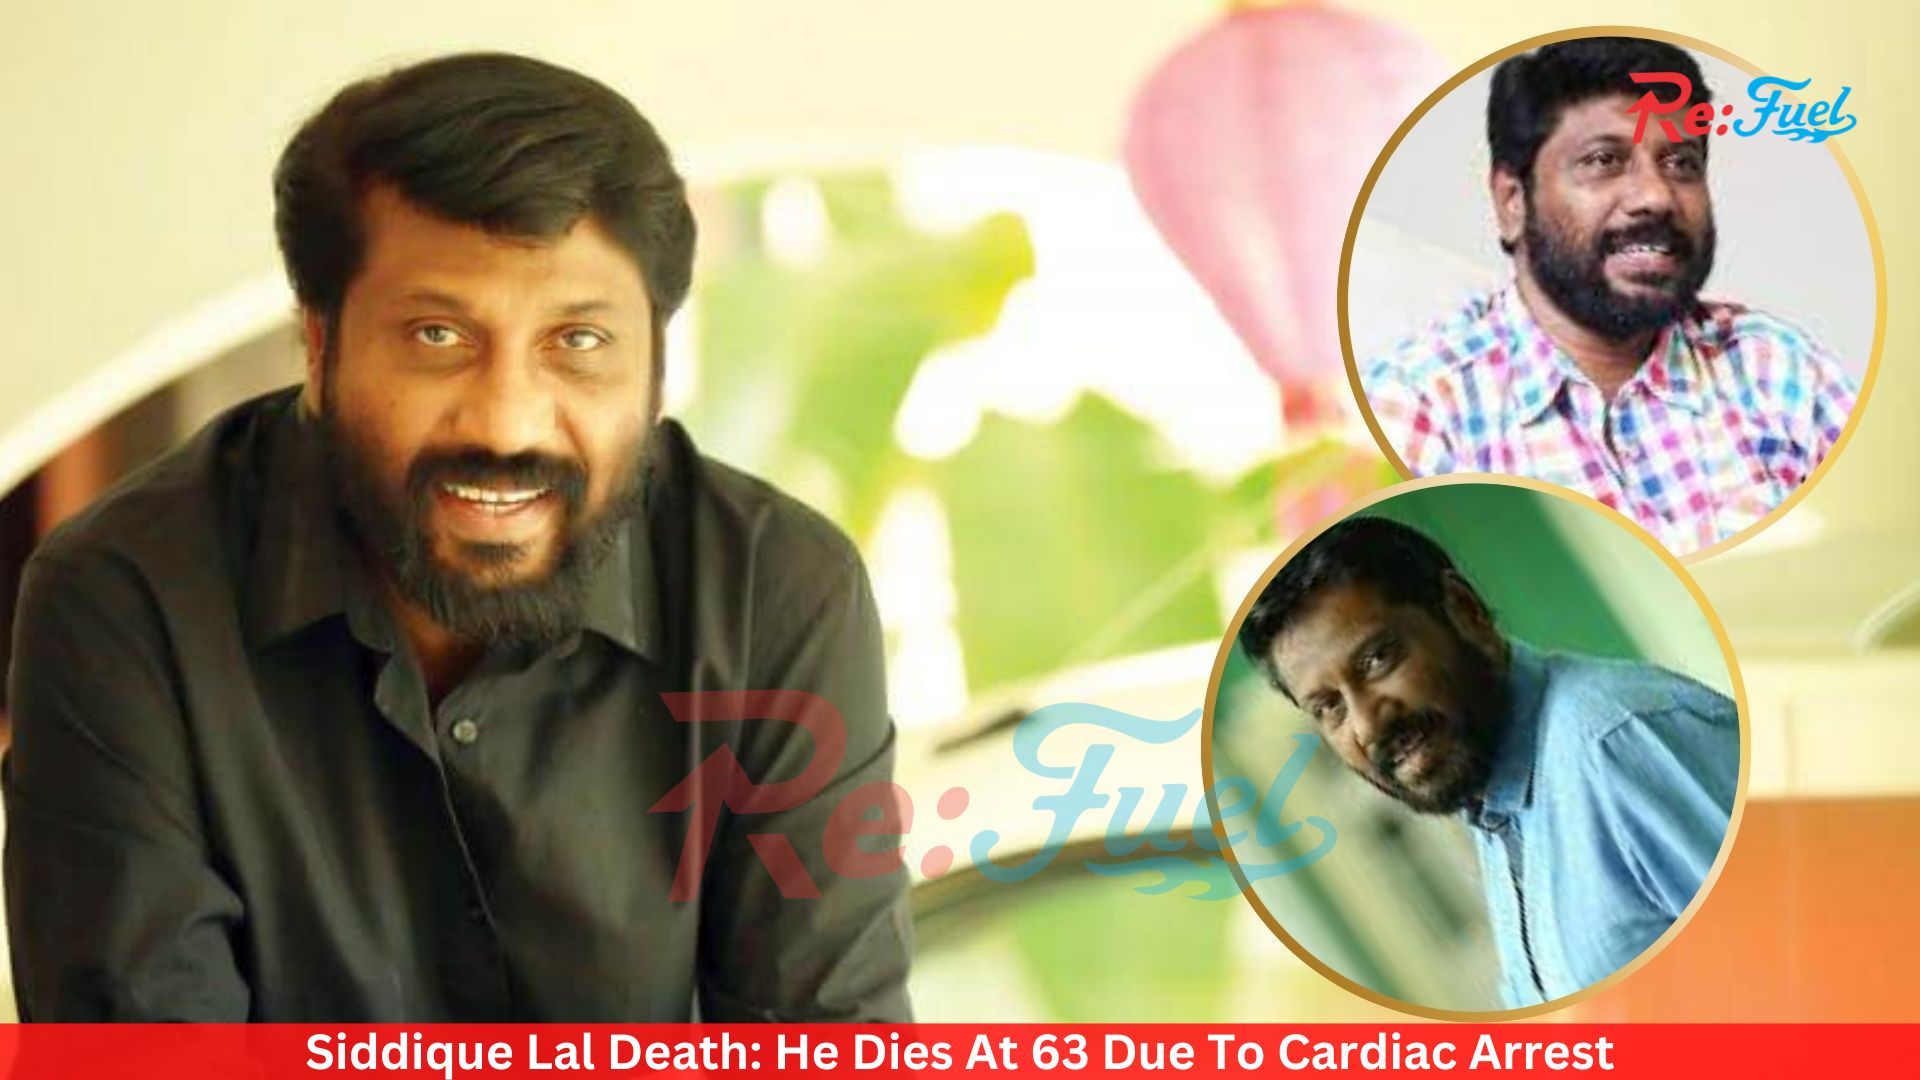 Siddique Lal Death: He Dies At 63 Due To Cardiac Arrest